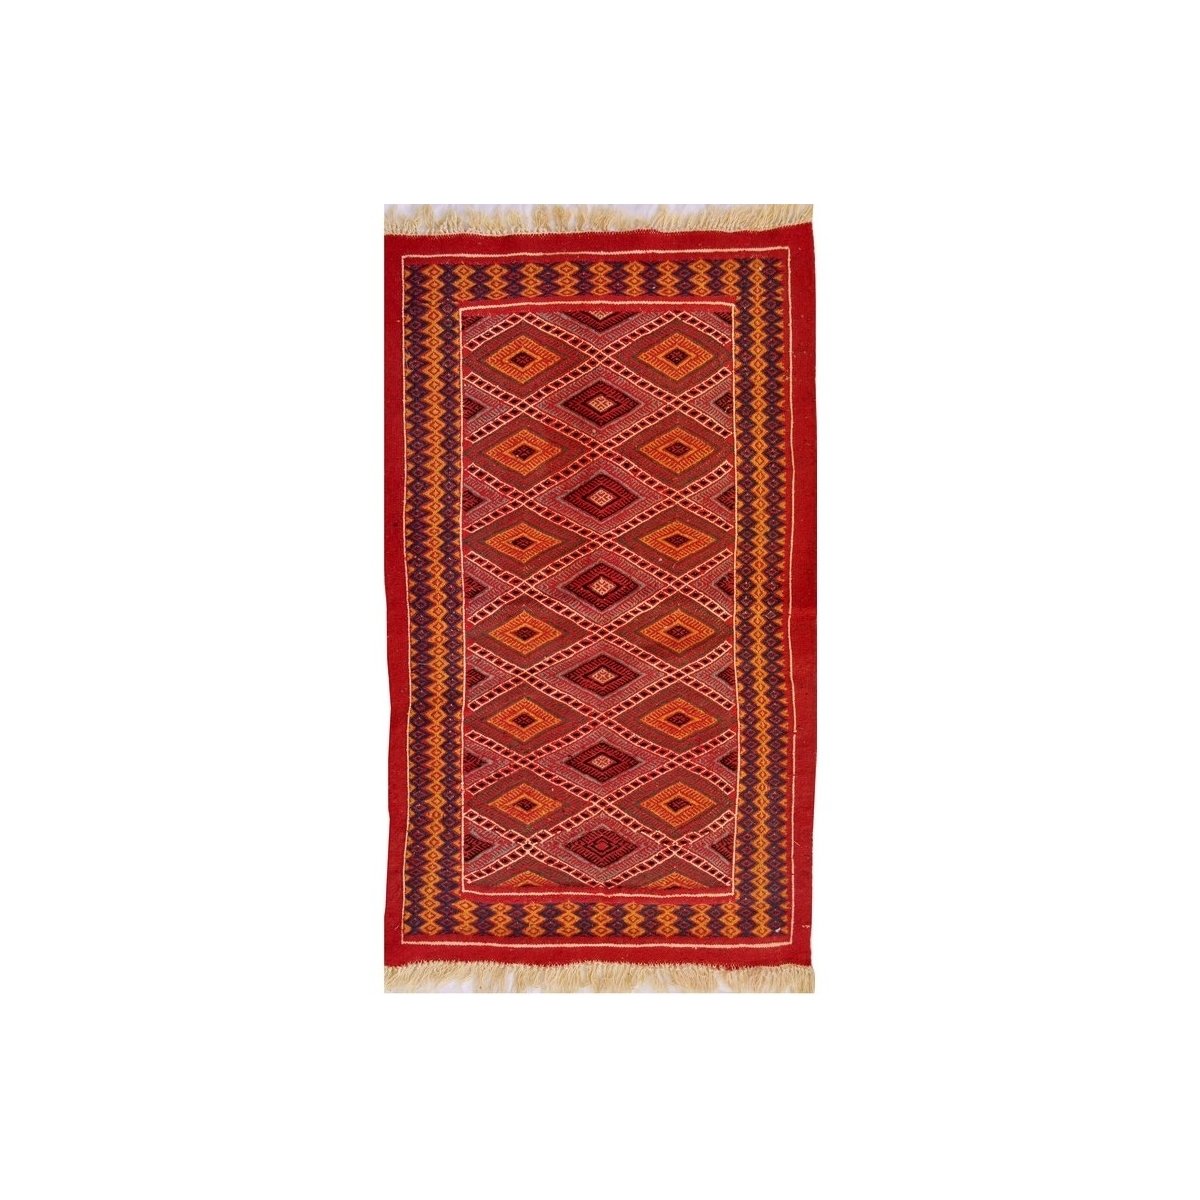 Tapis berbère Tapis Kilim Jawhar 100x200 Rouge/Muticolore (Tissé main, Laine, Tunisie) Tapis kilim tunisien style tapis marocain